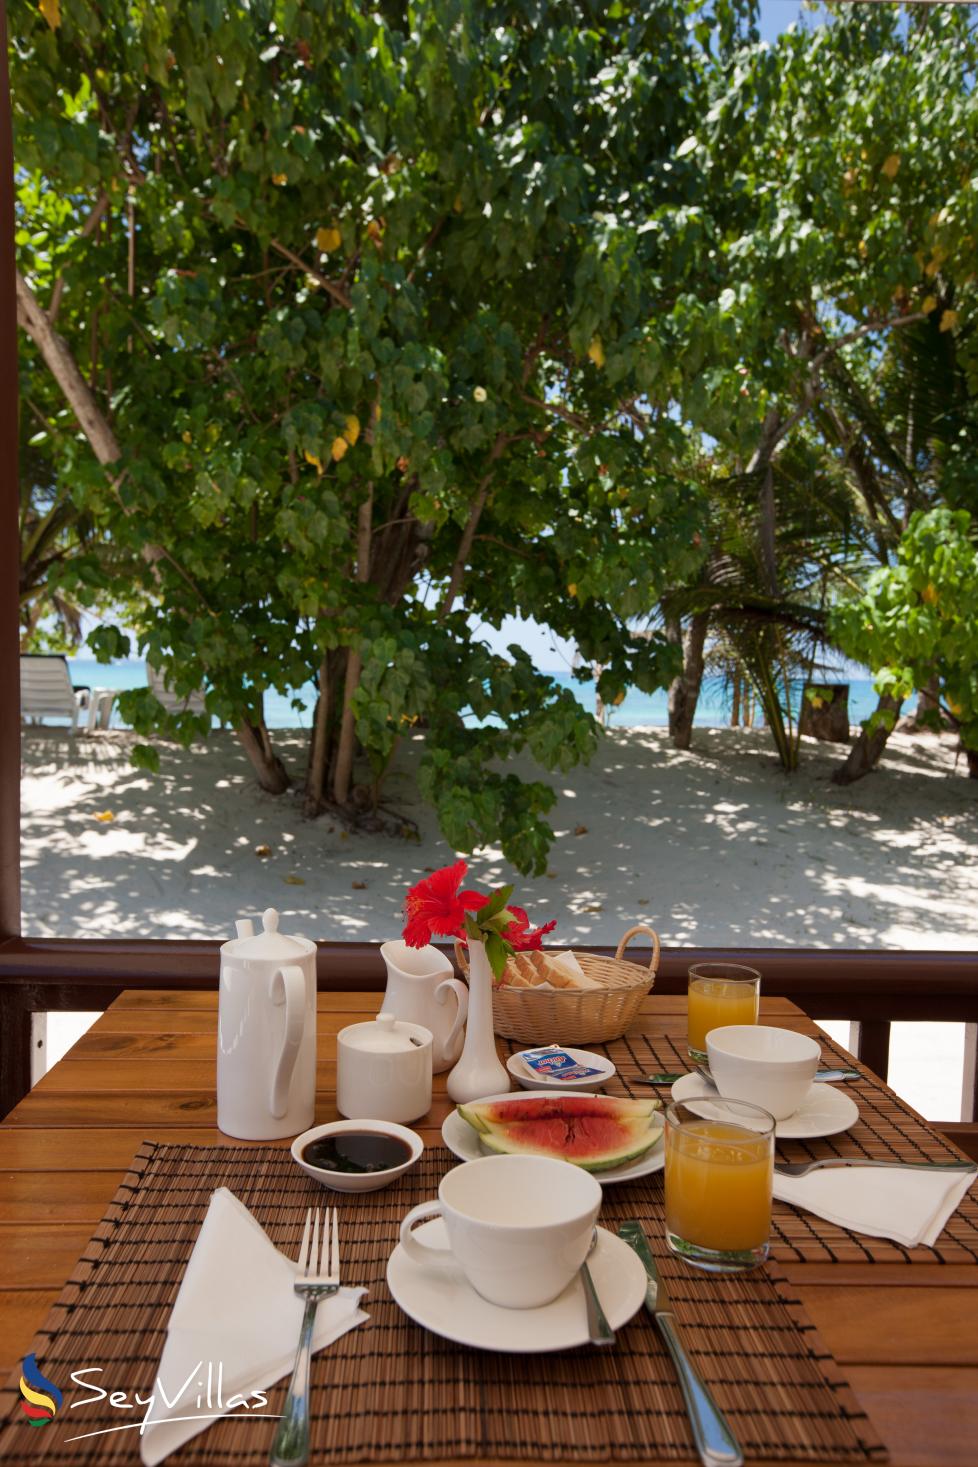 Photo 46: Villa Belle Plage - 1-Bedroom Beach-Front Villa - Praslin (Seychelles)